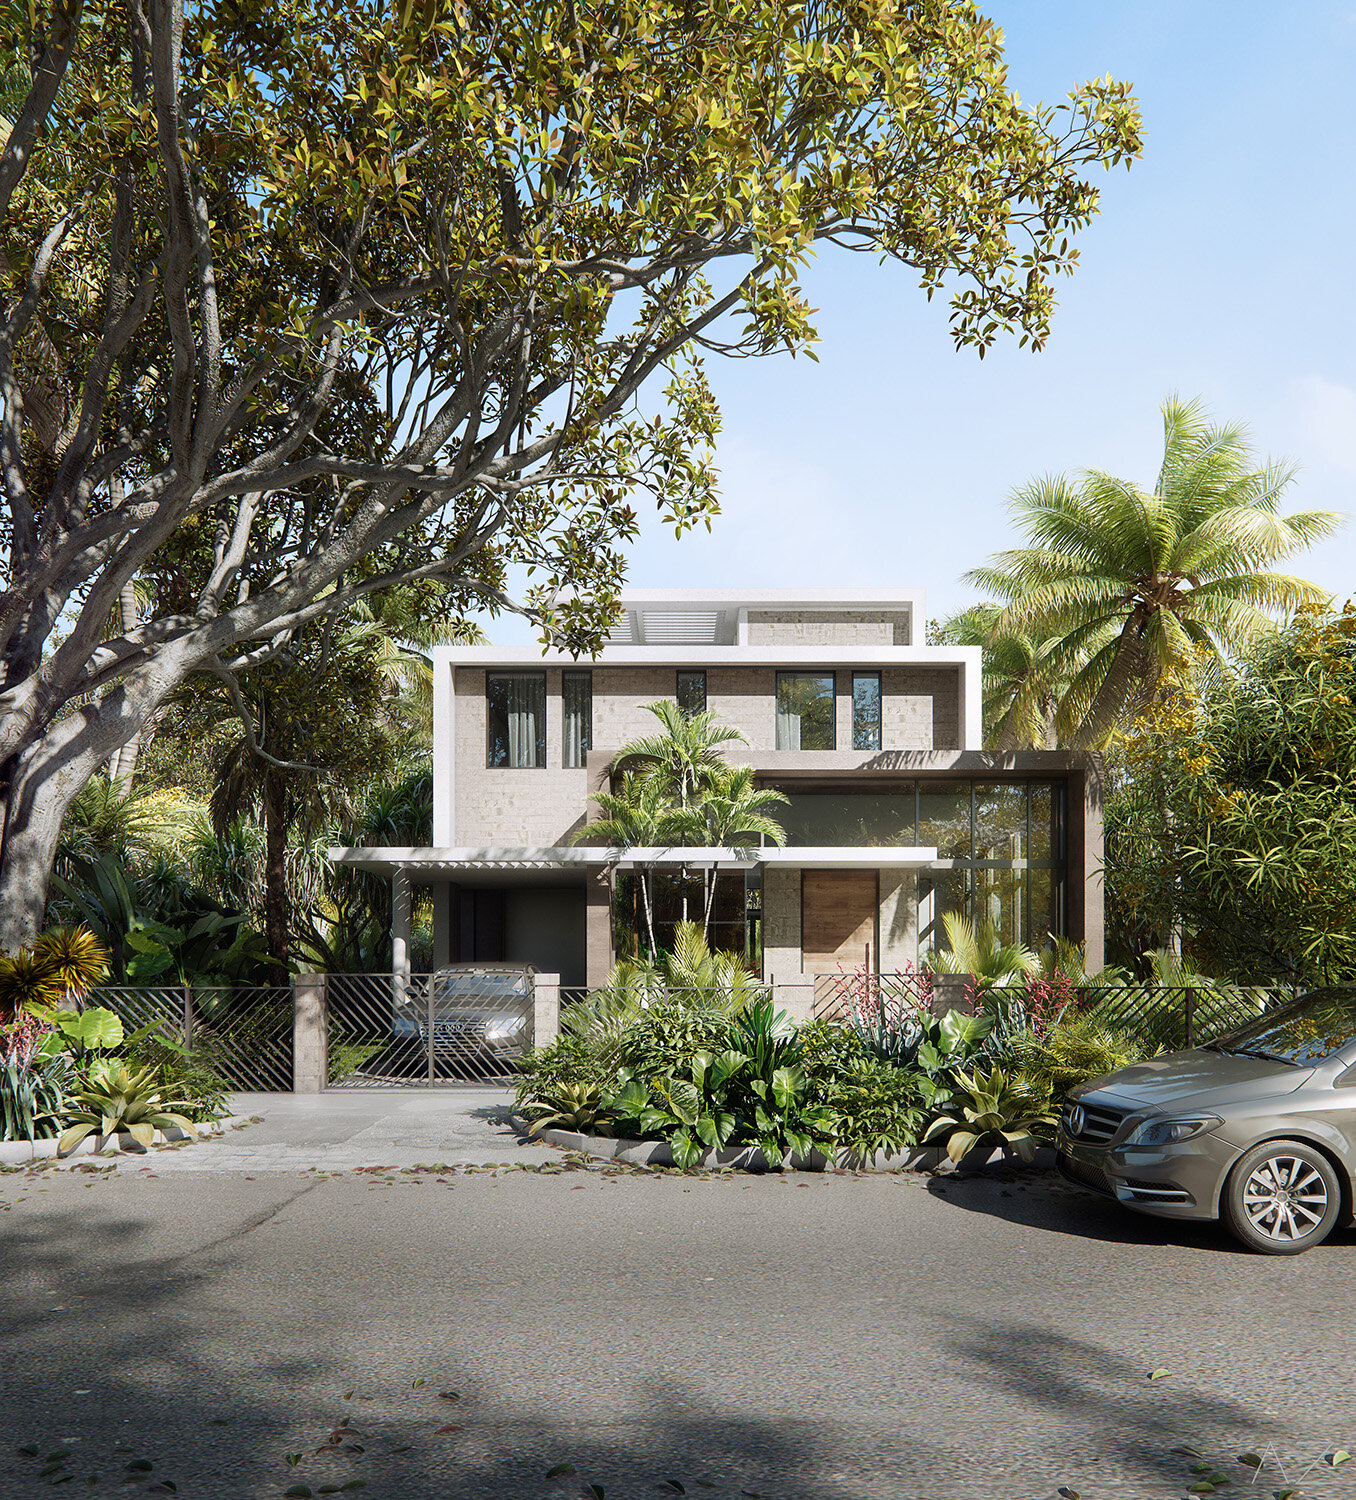  Future Vision Studios - Villa Coconut Grove - 3D Rendering by Azeez Bakare Studios 